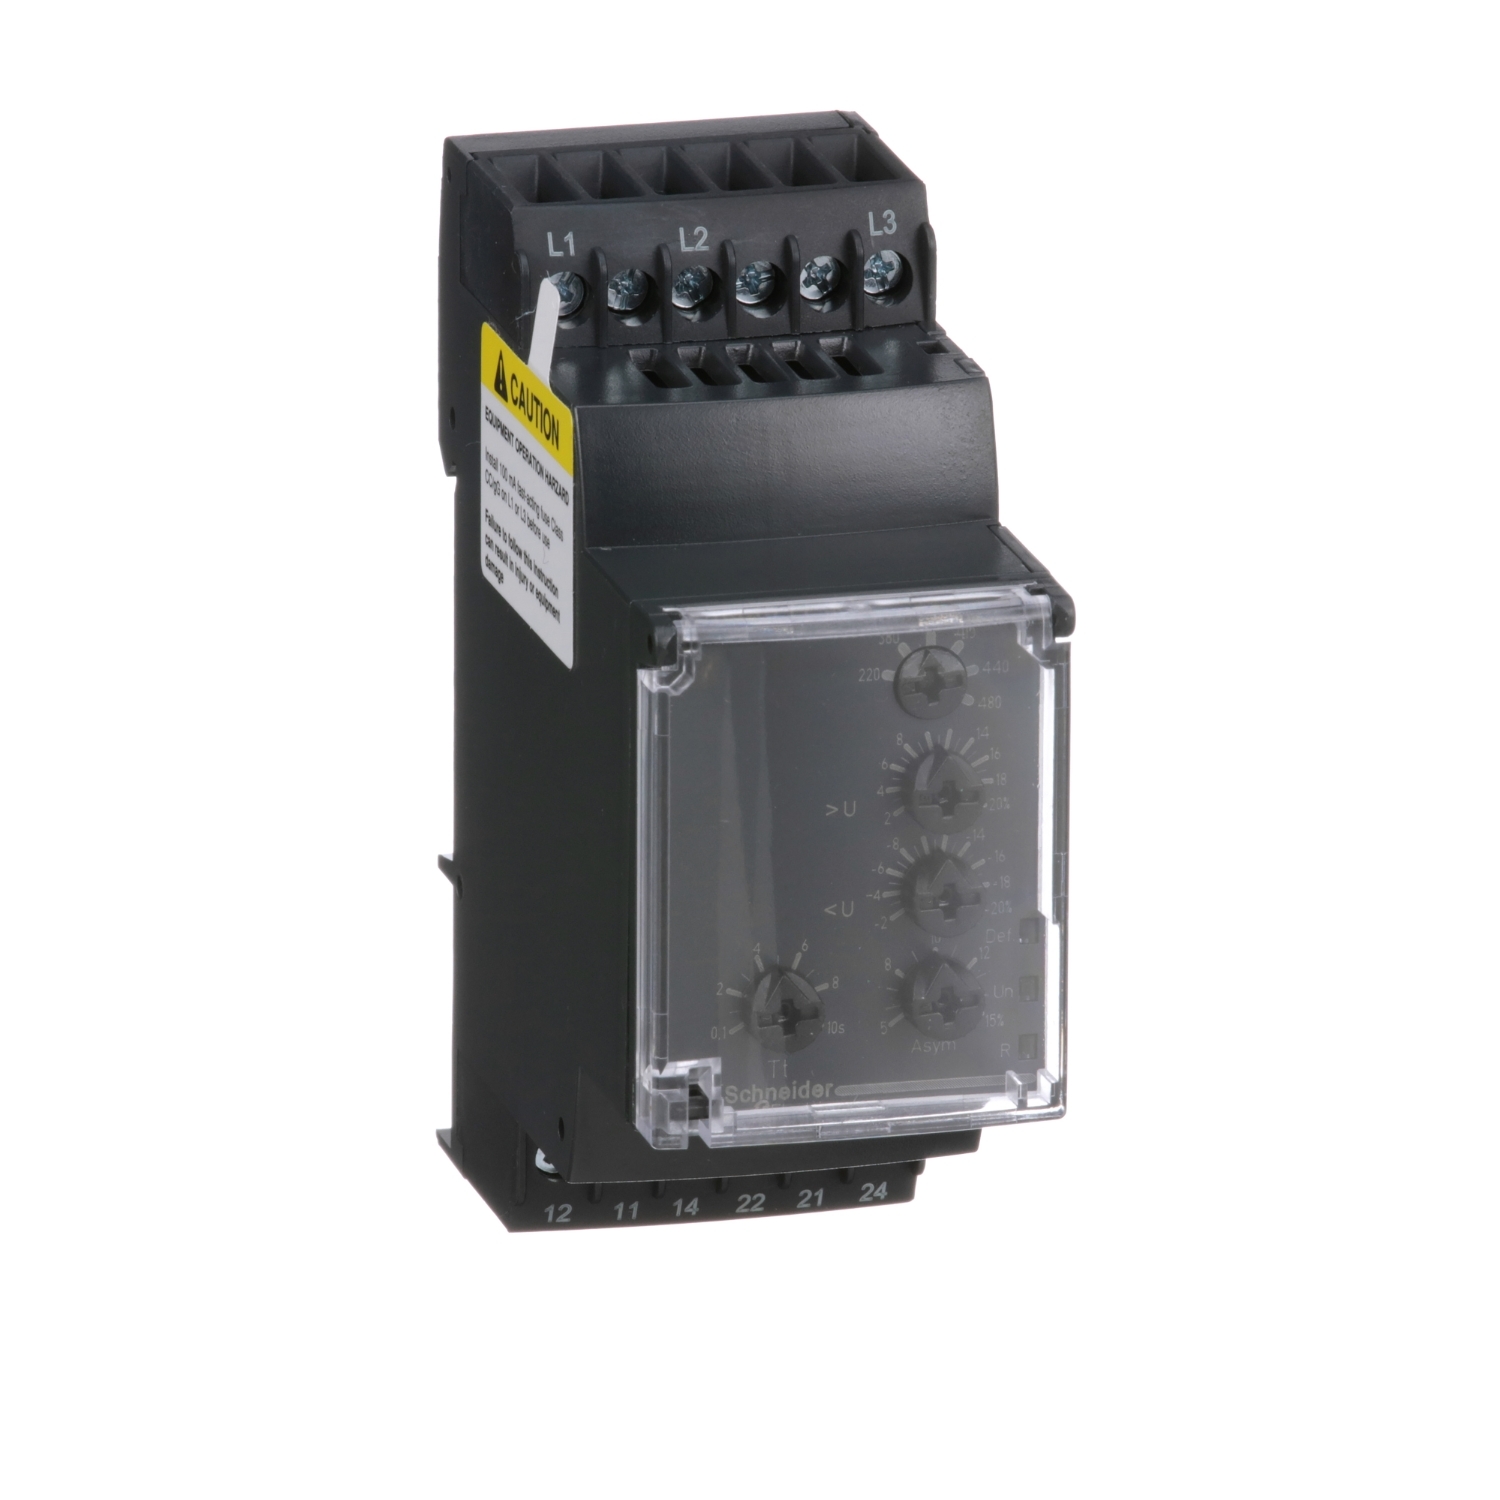 multifunction phase control relay RM35-T - range 194..528 V AC